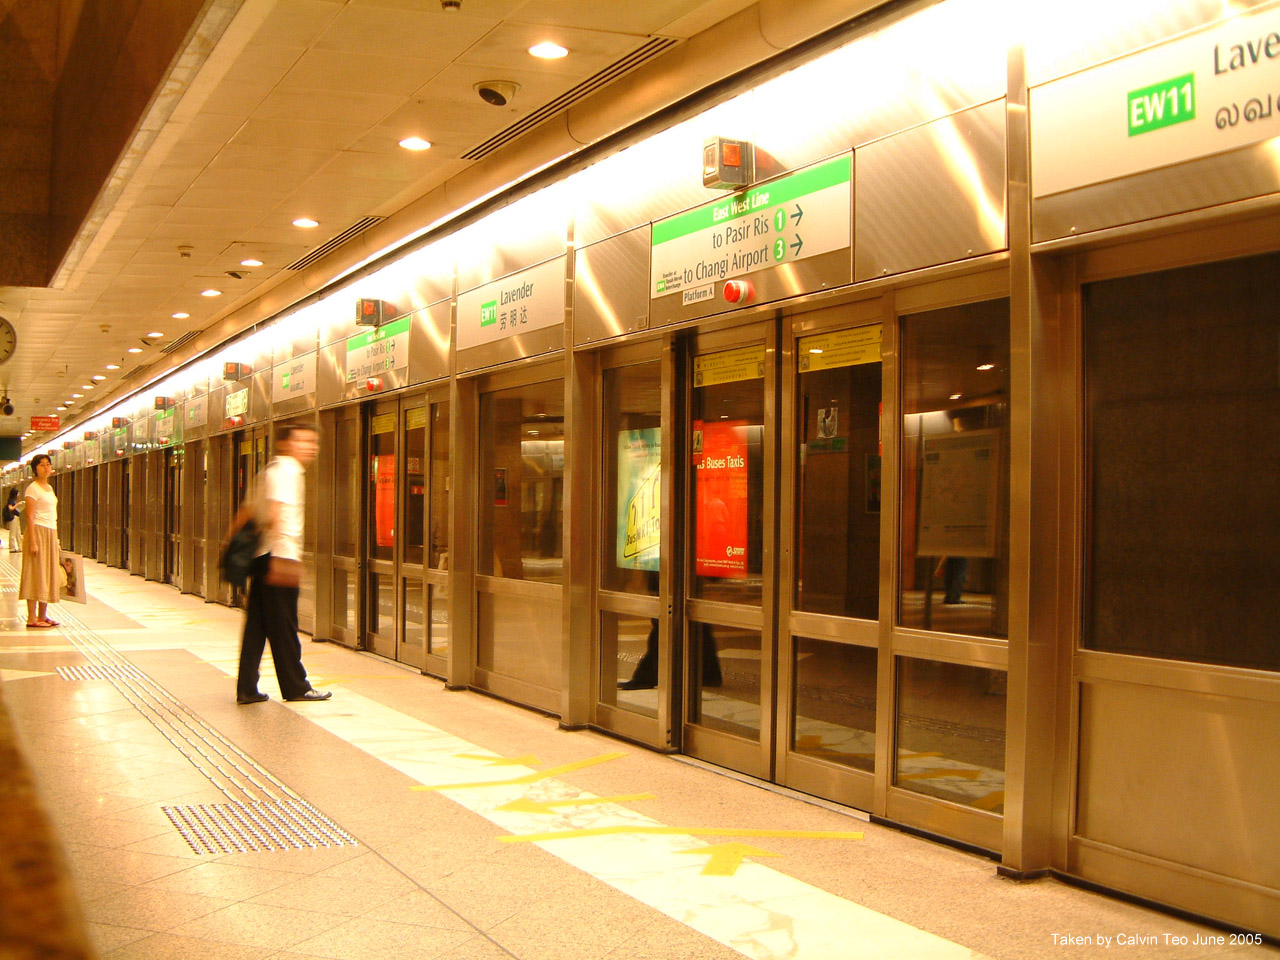 East west Green Line Singapore EW11 Lavender MRT Station